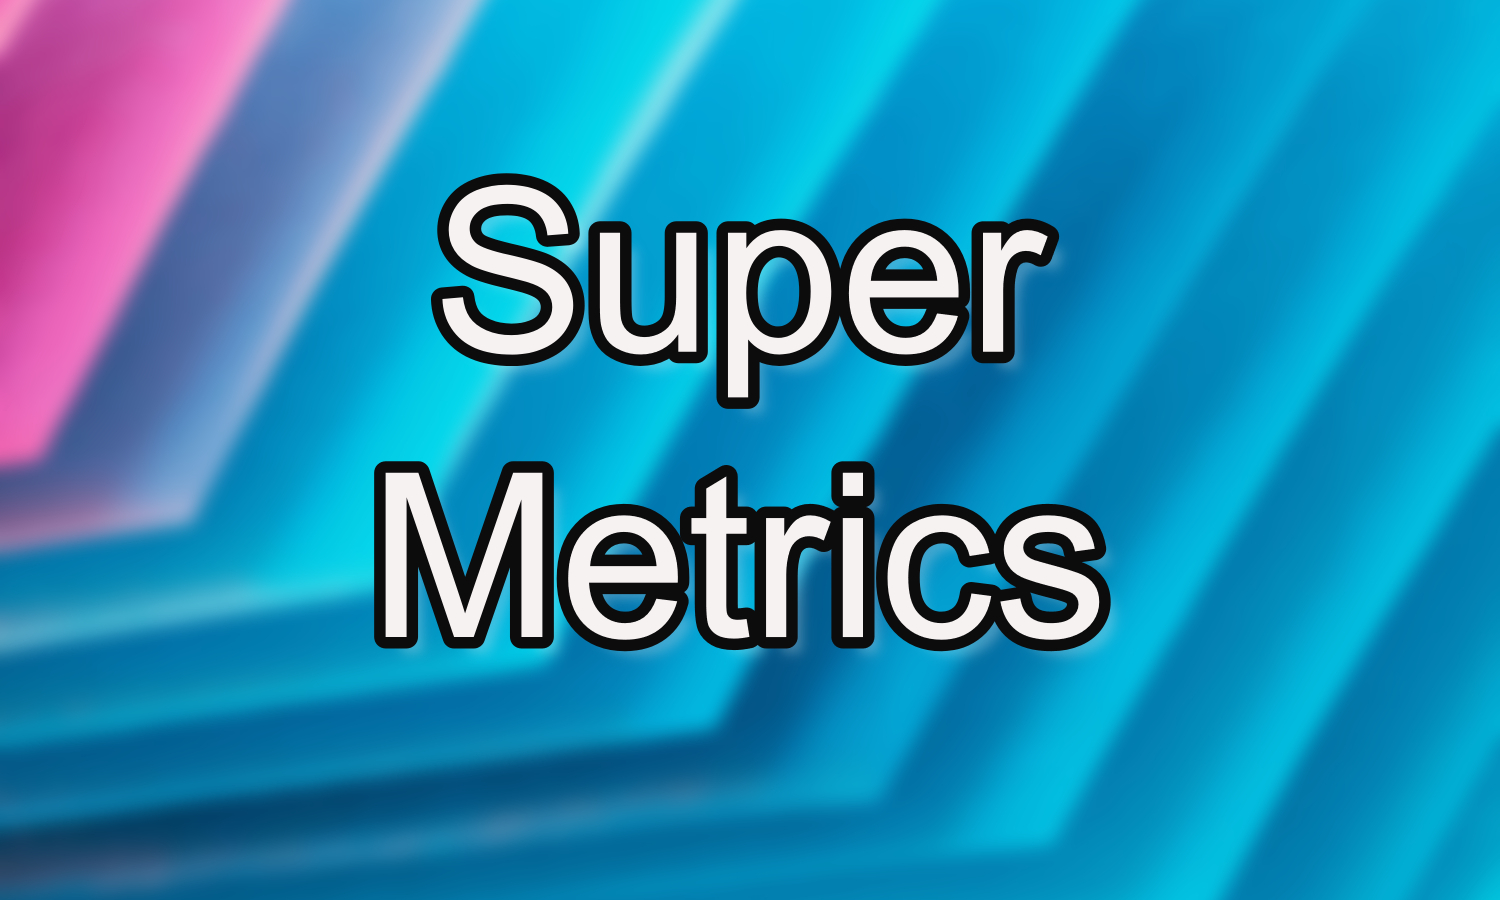 Super metrics